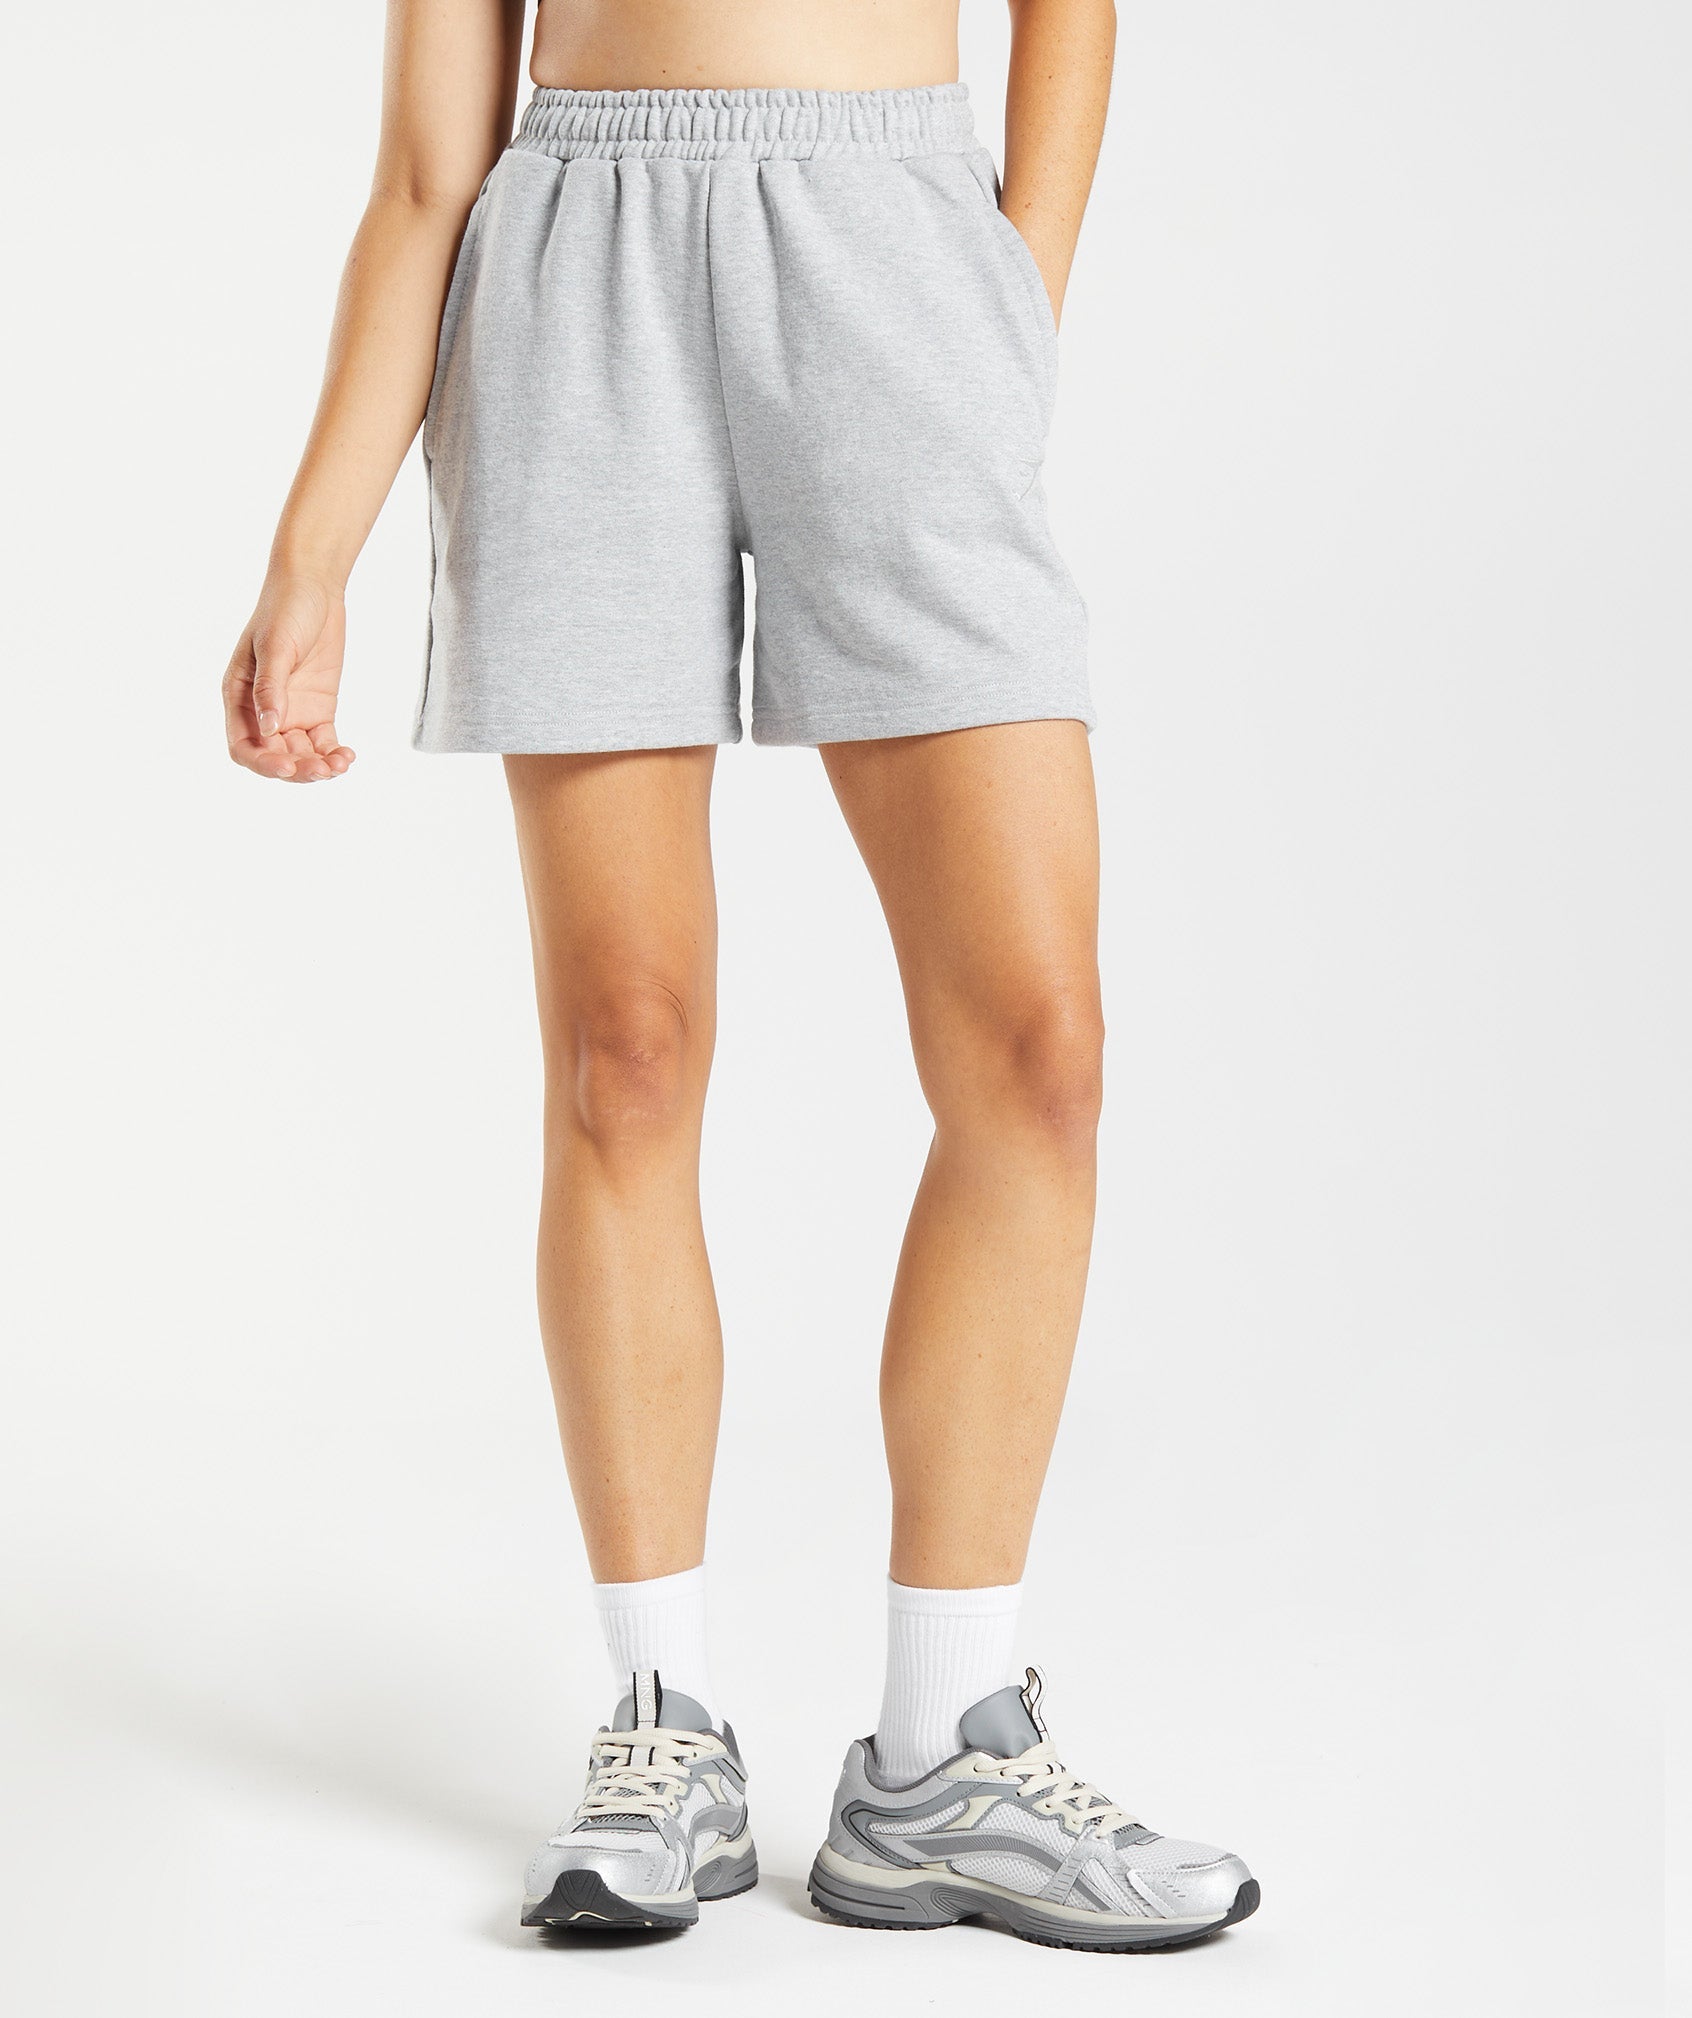 Gymshark Rest Day Sweats Shorts - Light Grey Core Marl